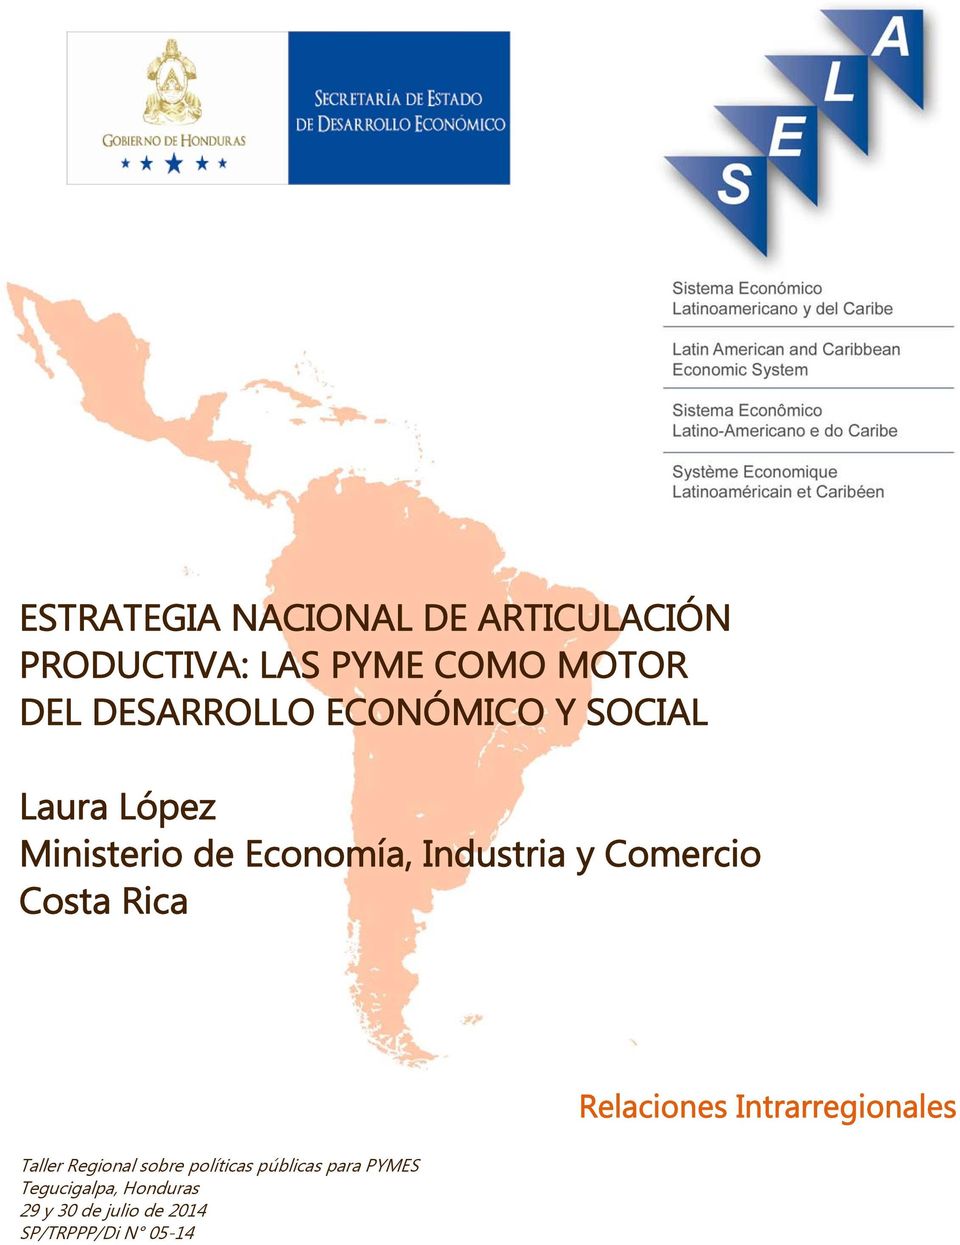 Comercio Costa Rica Taller Regional sobre políticas públicas para PYMES